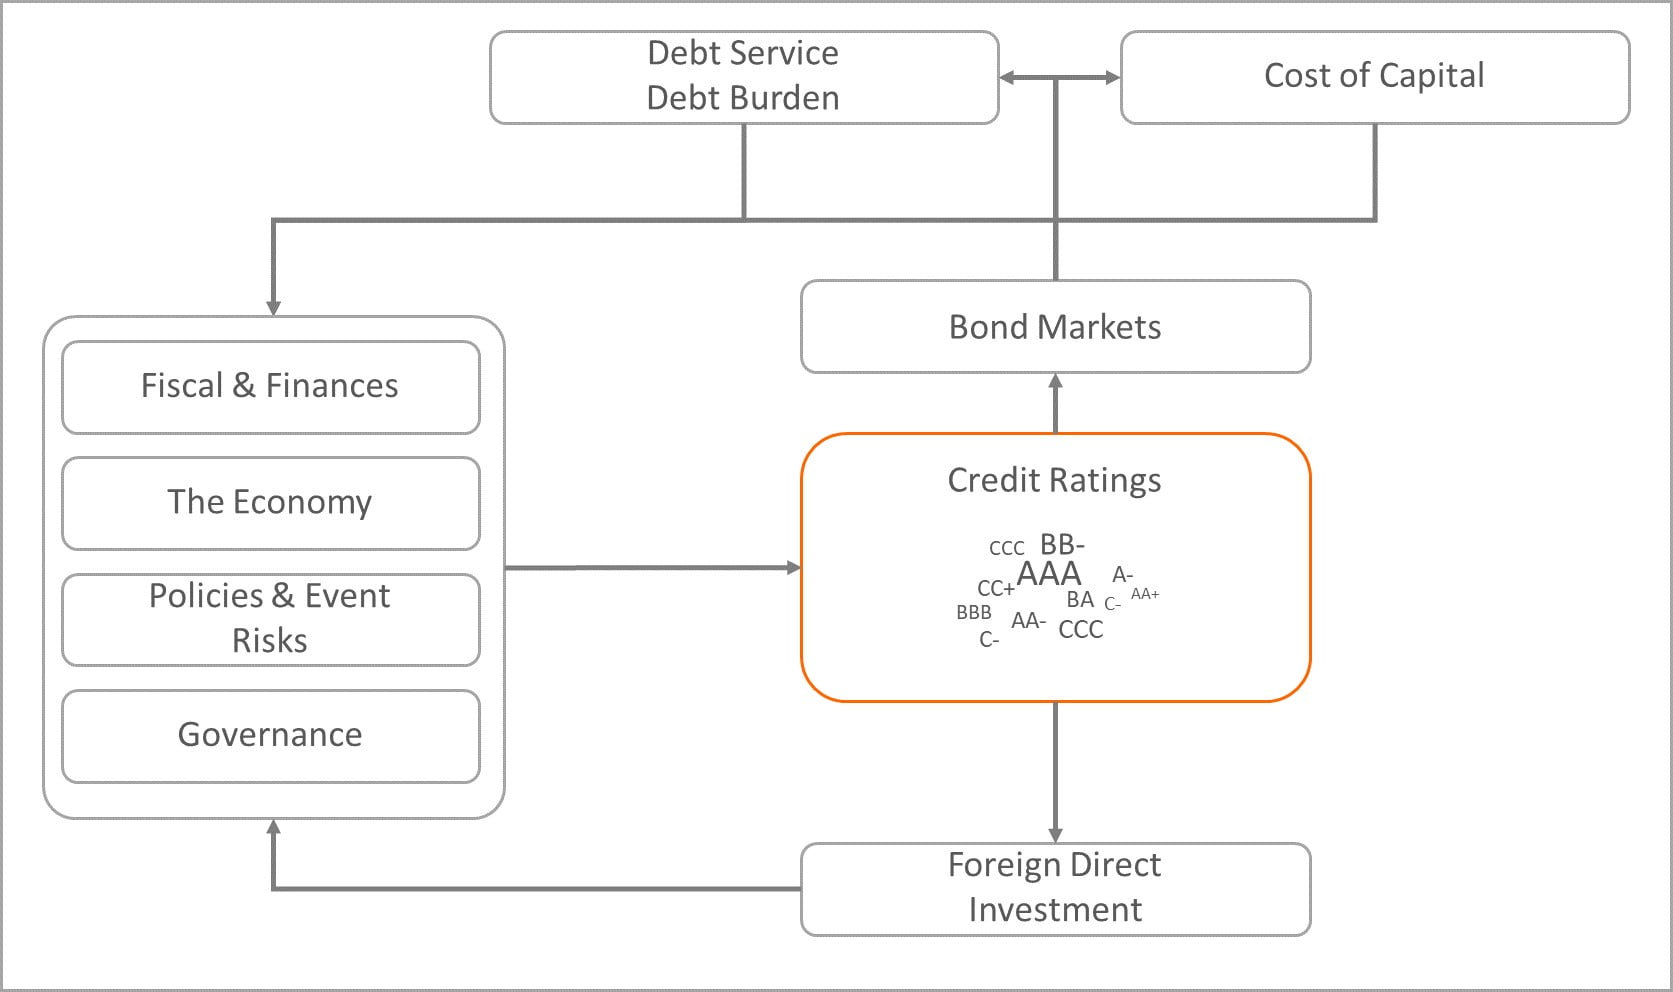 Credit rating circle: bad credit rating leads to higher capital costs, leads to bad credit rating